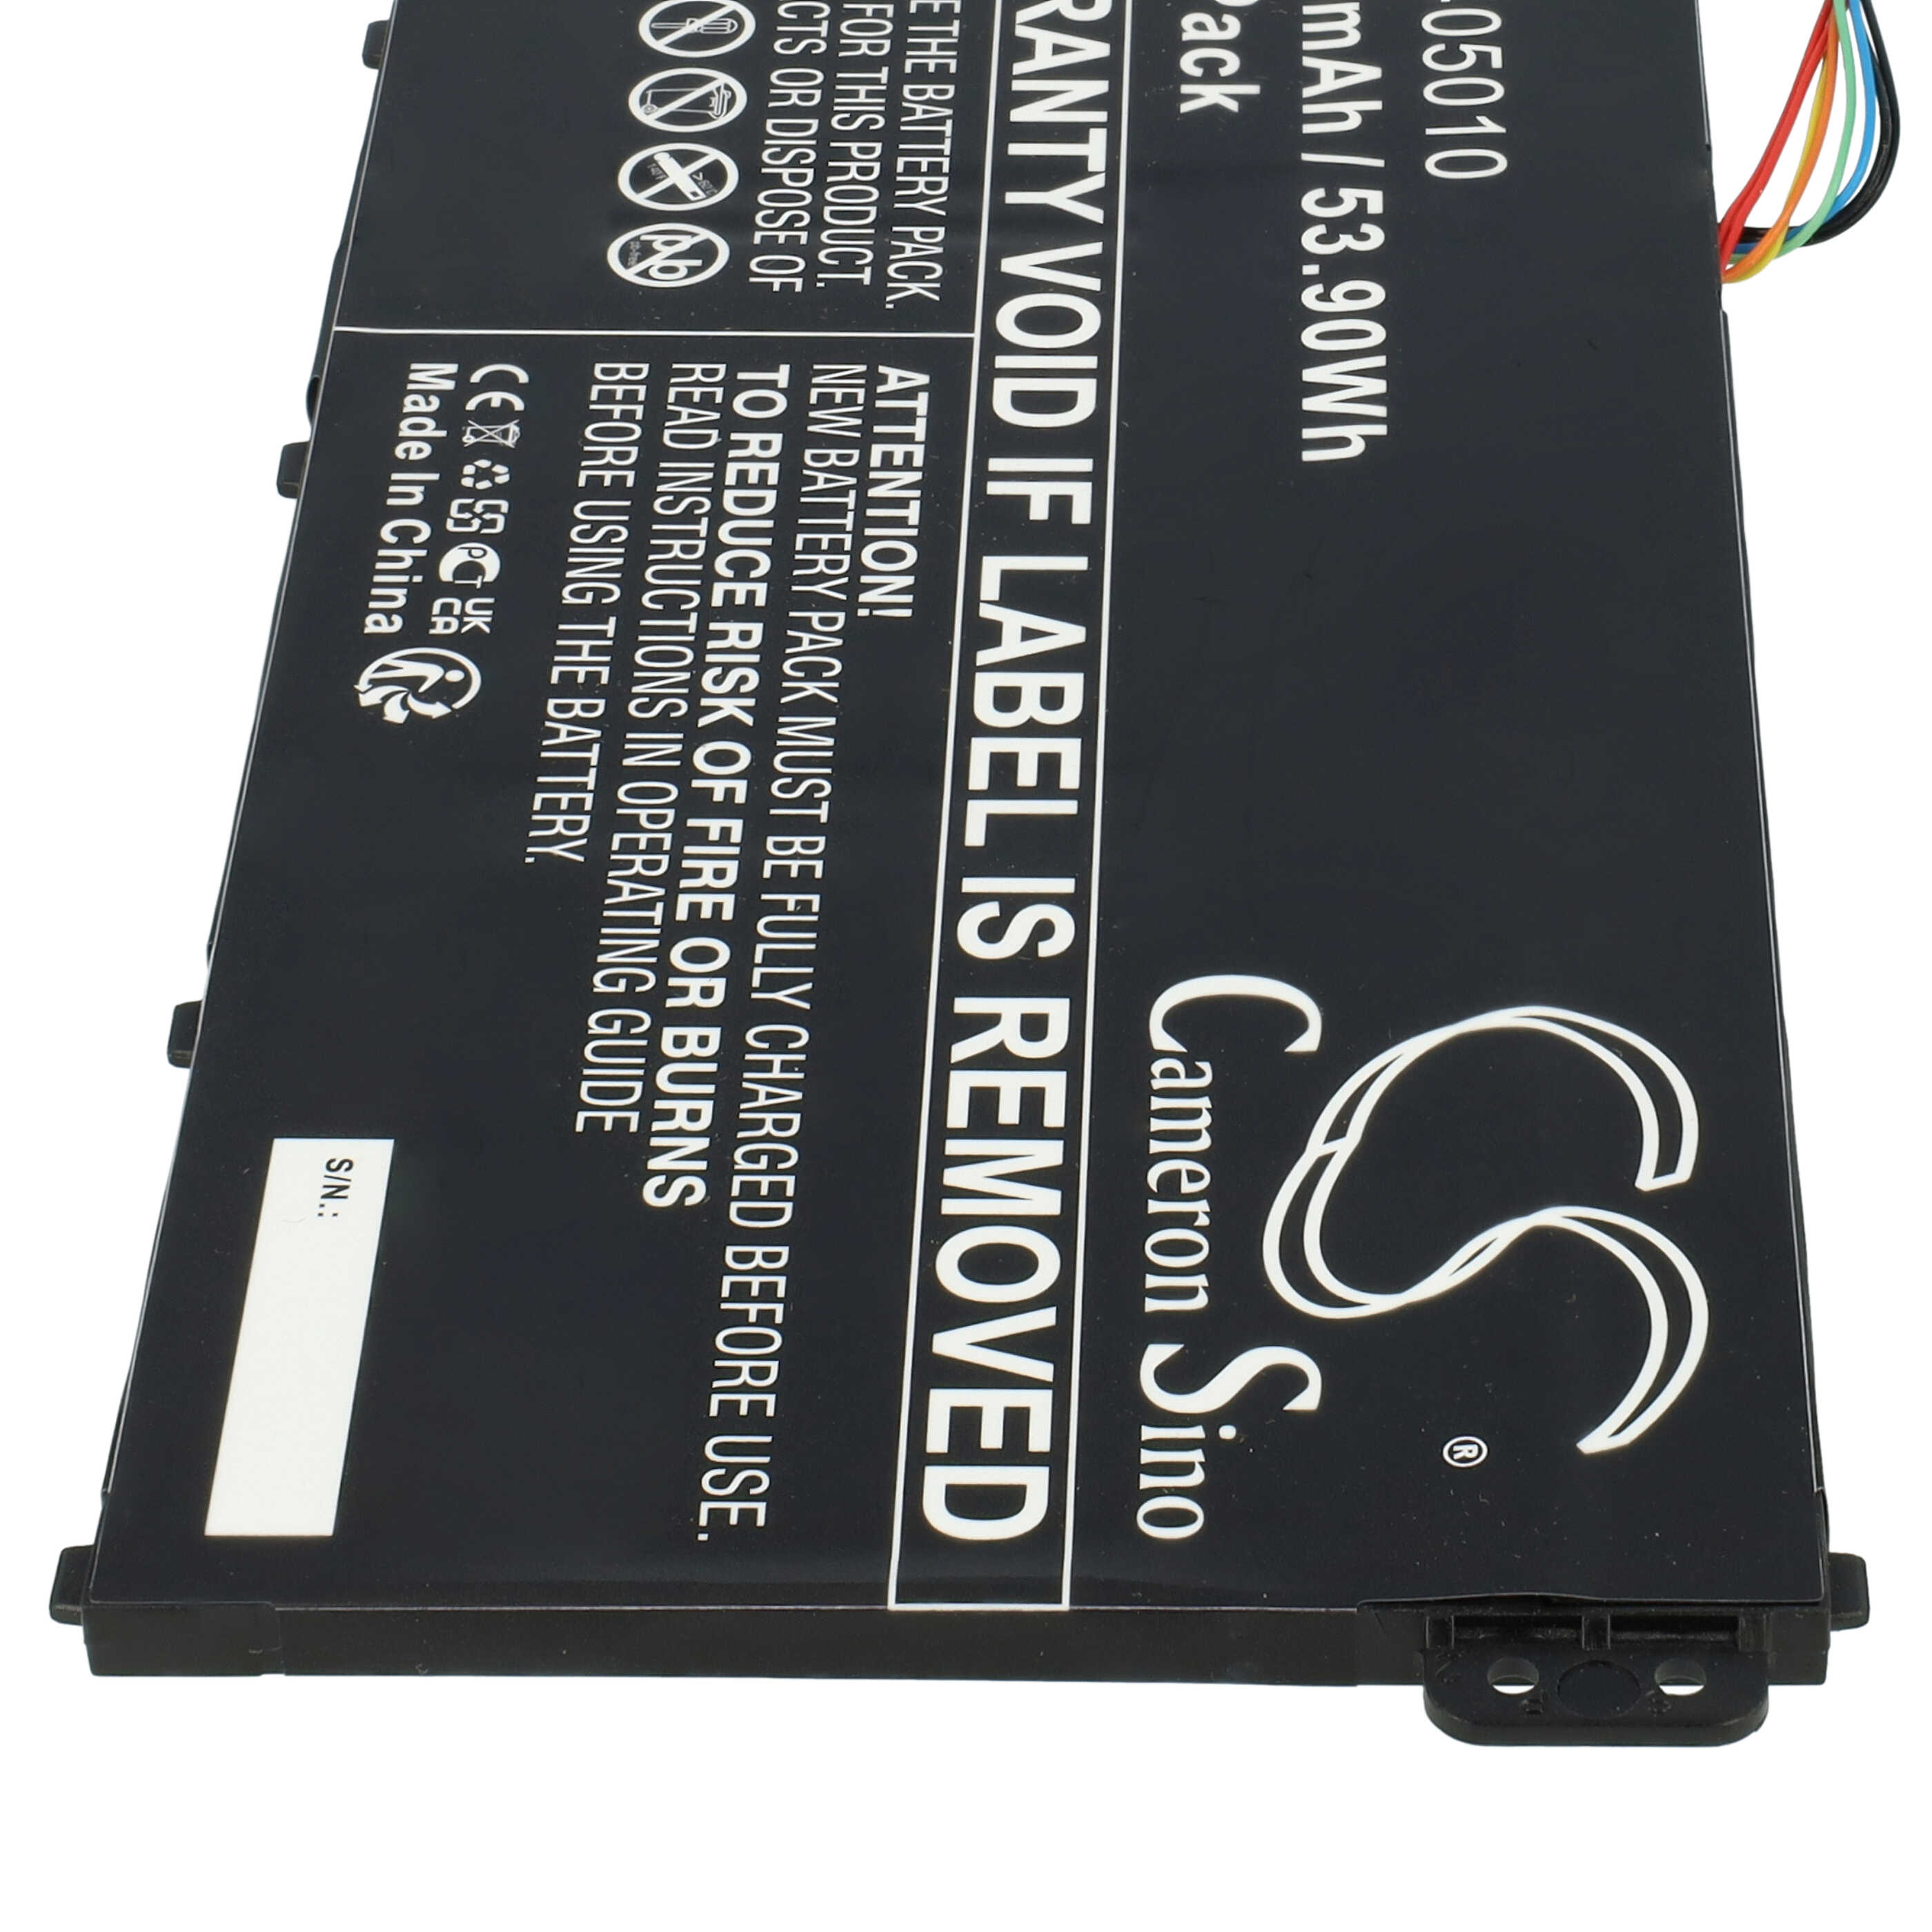 Batteria sostituisce Acer KT00405010, AP19B5L per notebook Acer - 3500mAh 15,4V Li-Poly